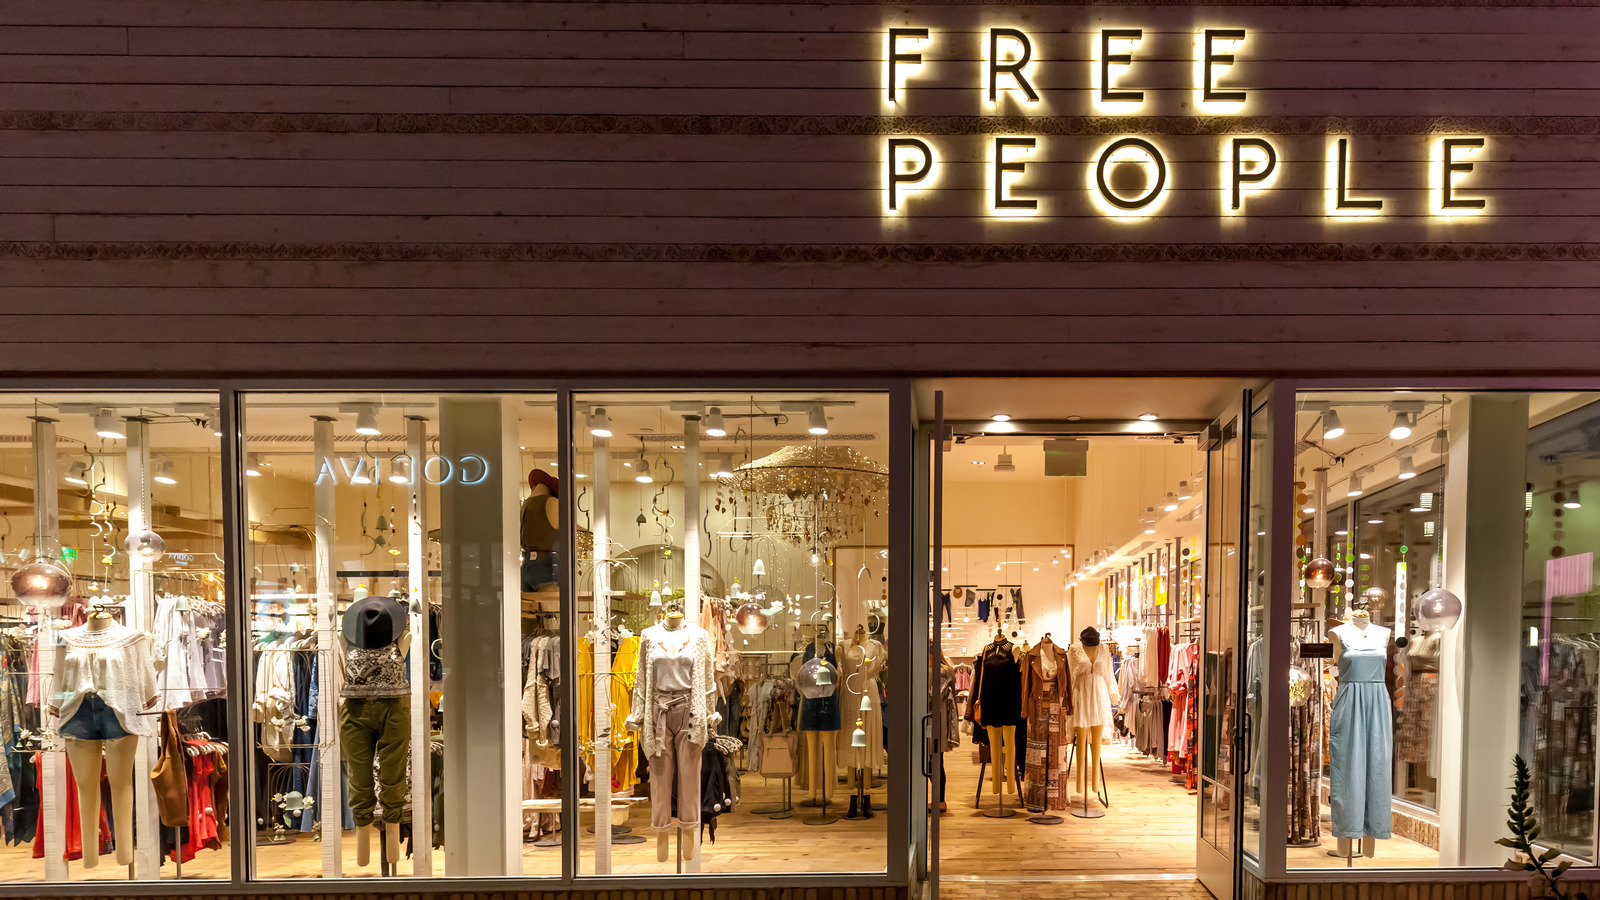 Free People - Pants Store